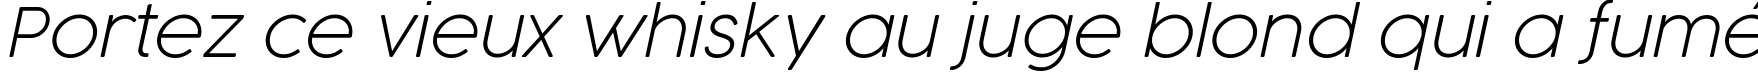 Пример написания шрифтом Cocogoose Pro UltraLight Italic текста на французском